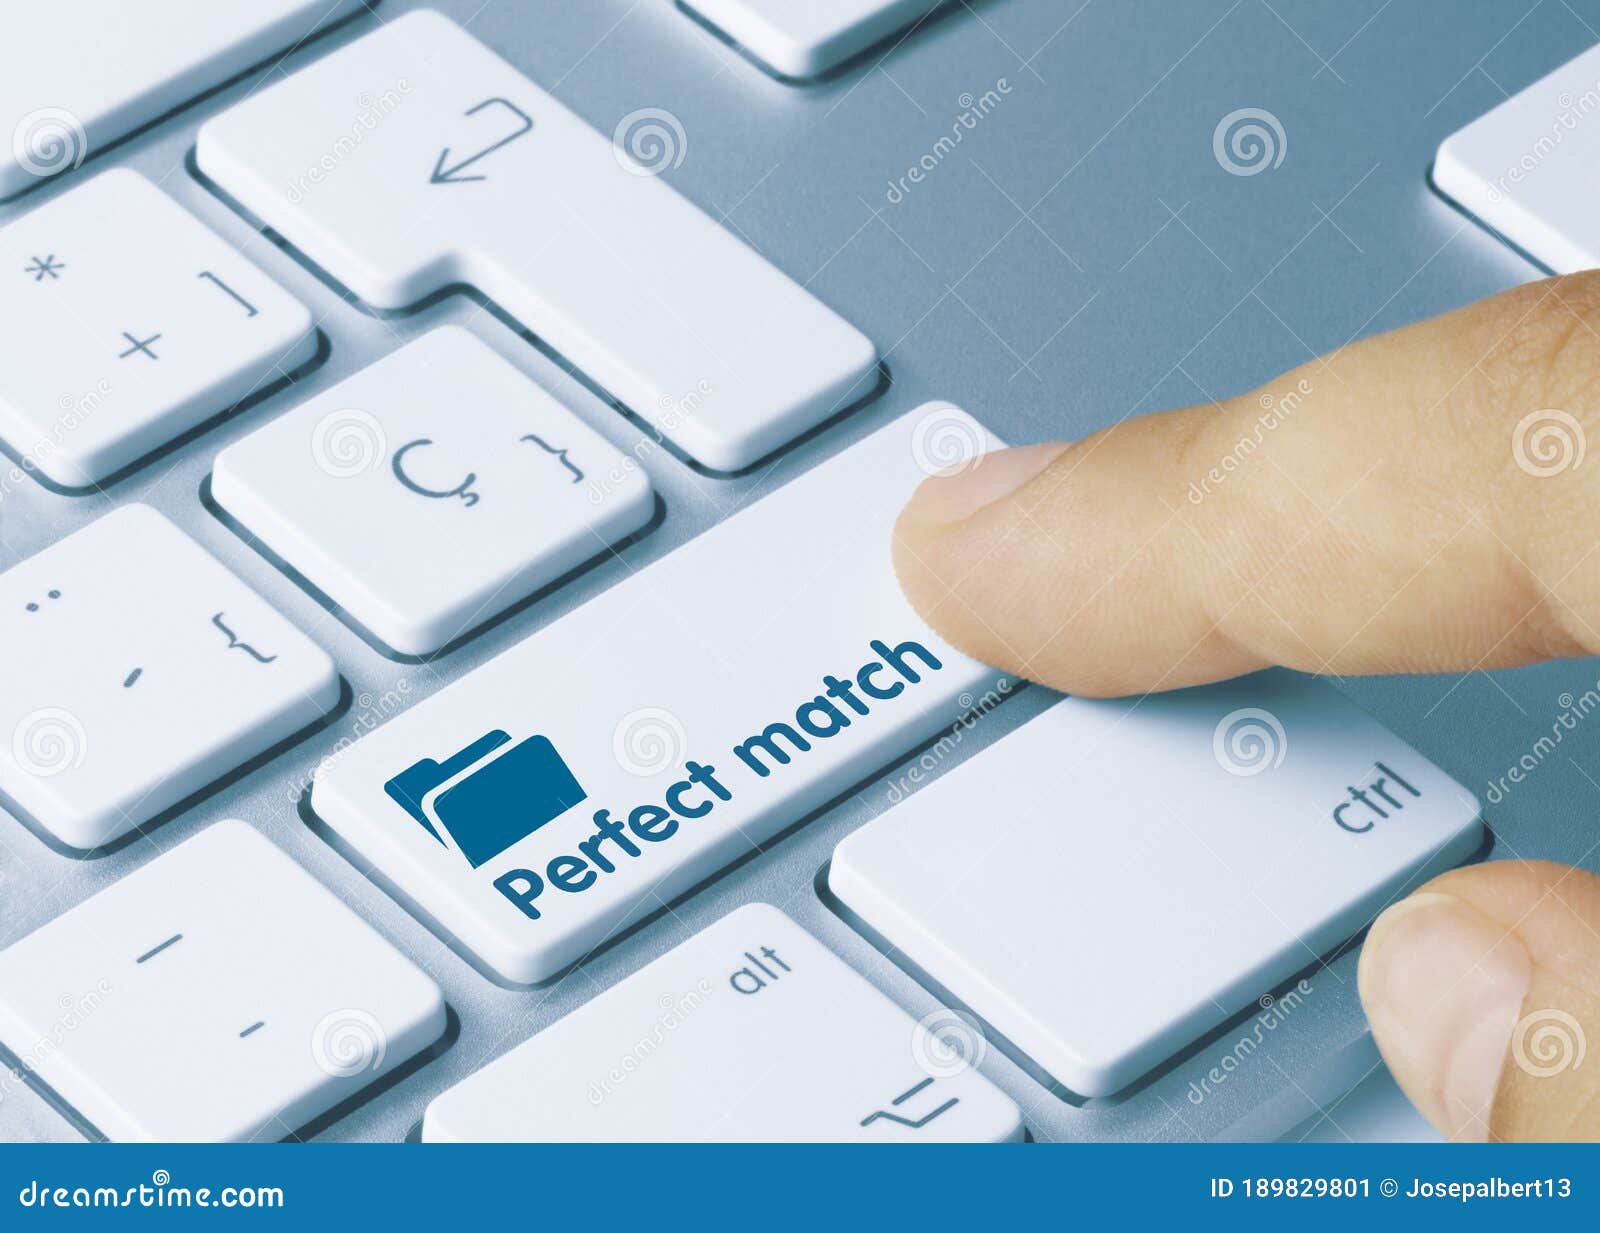 perfect match - inscription on blue keyboard key